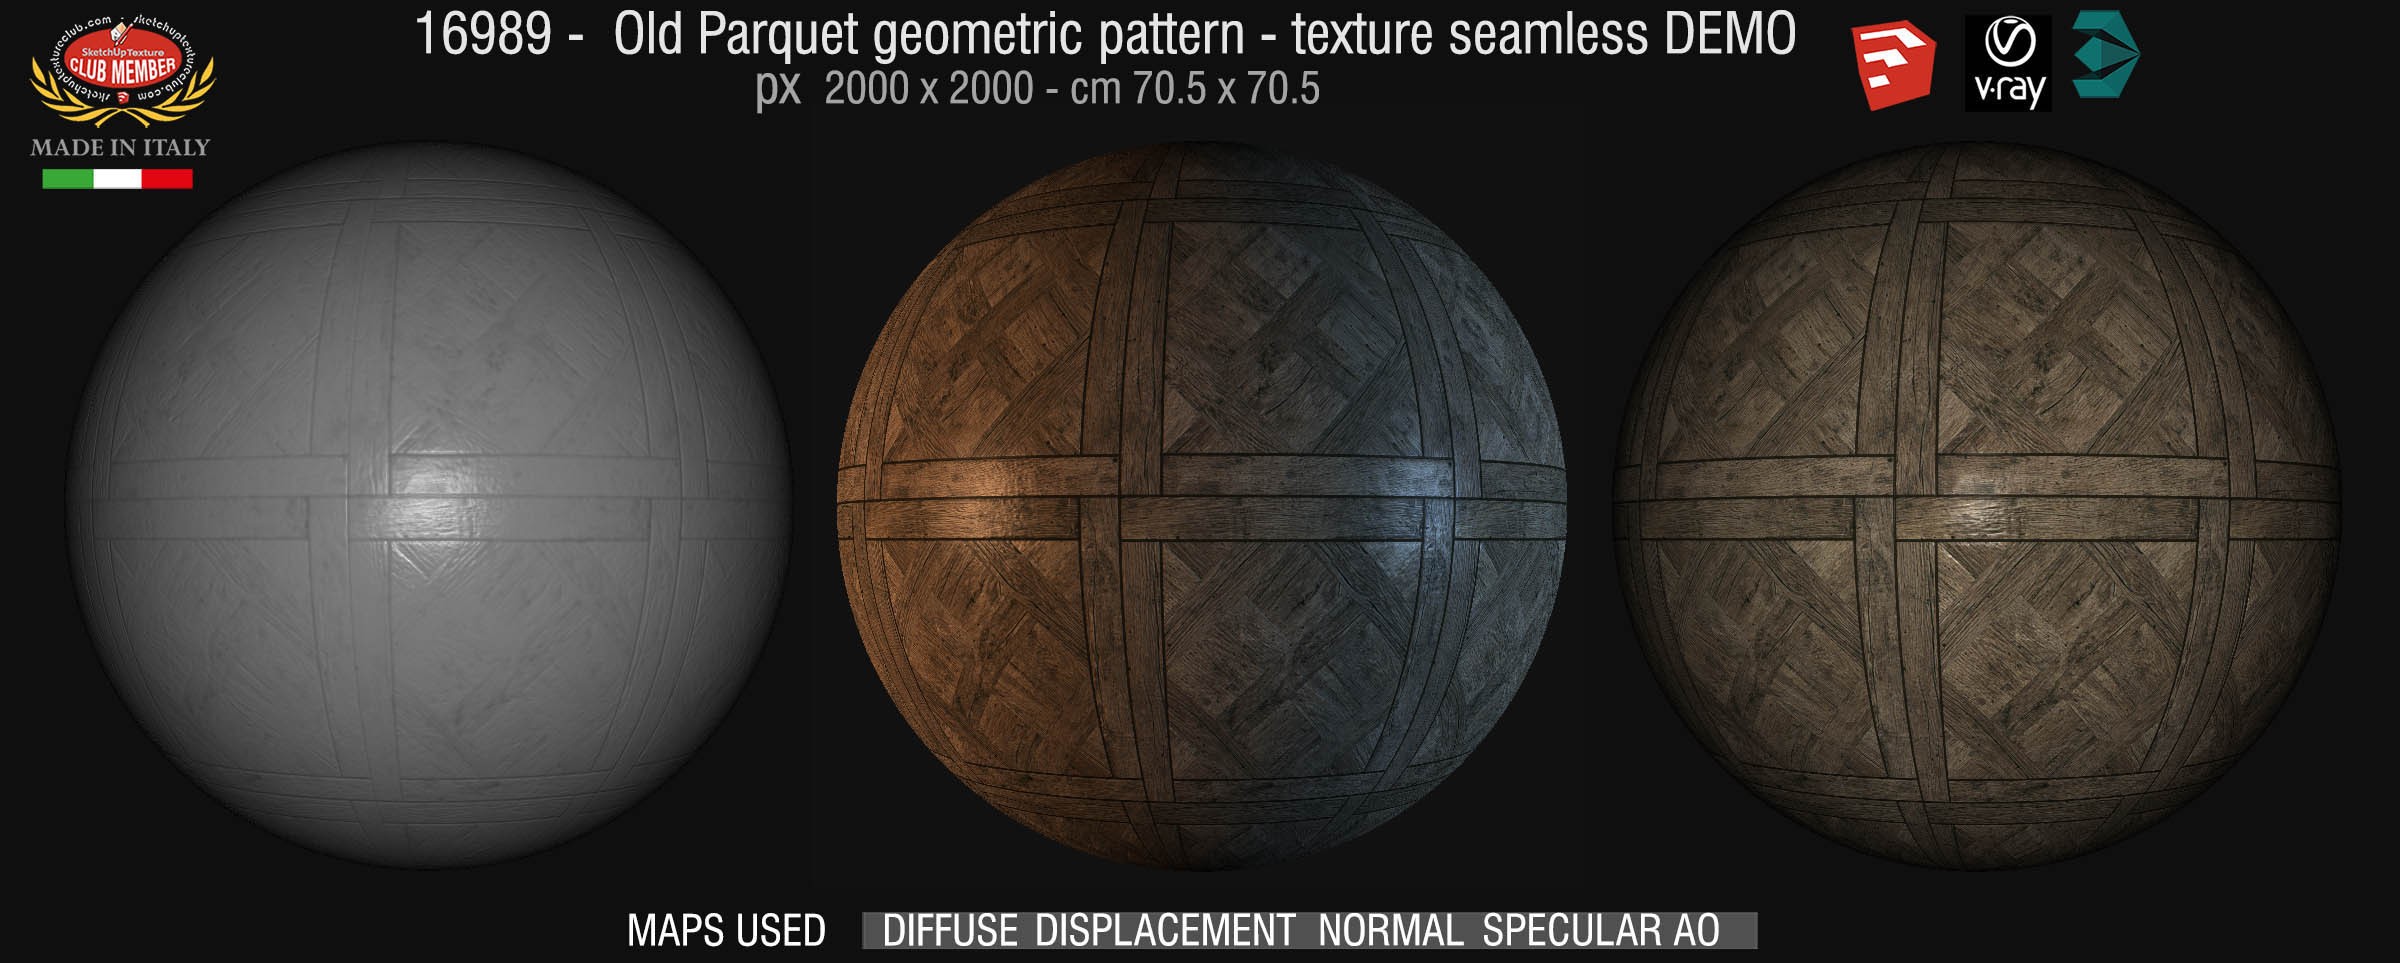 16989 Old Parquet geometric pattern texture seamless + maps DEMO